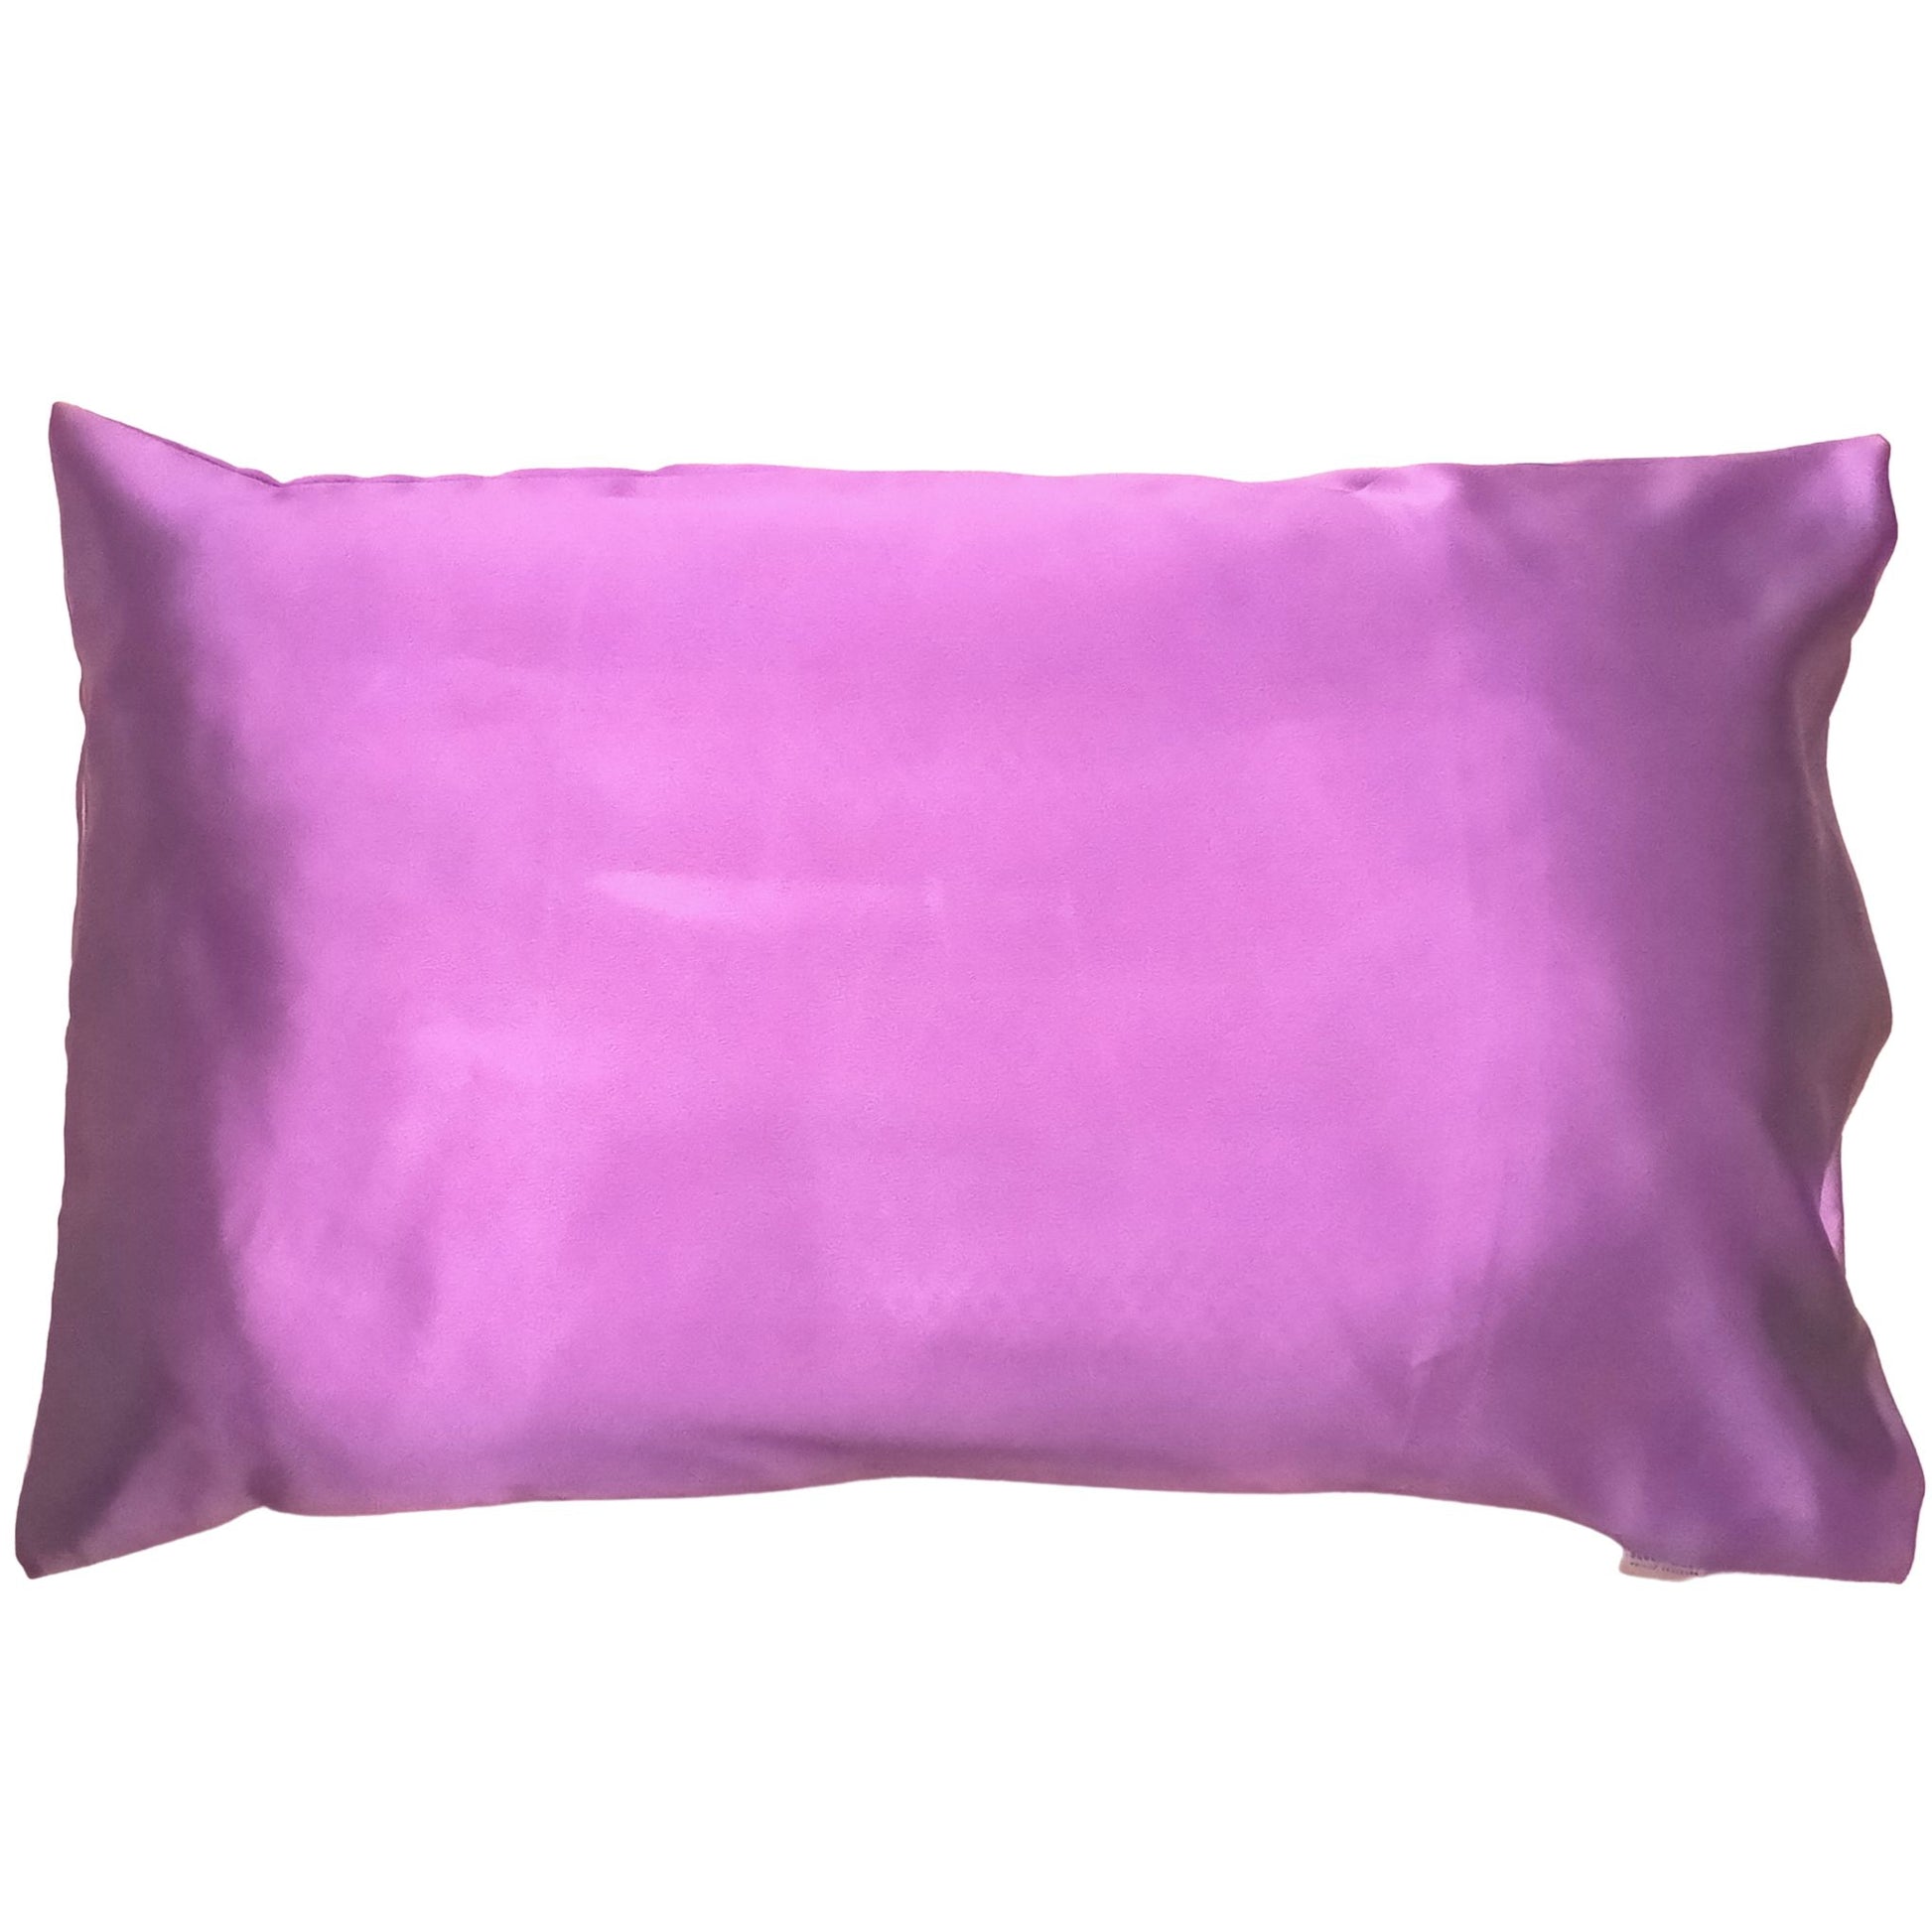 Deep Mauve purple satin poly silk pillowcase